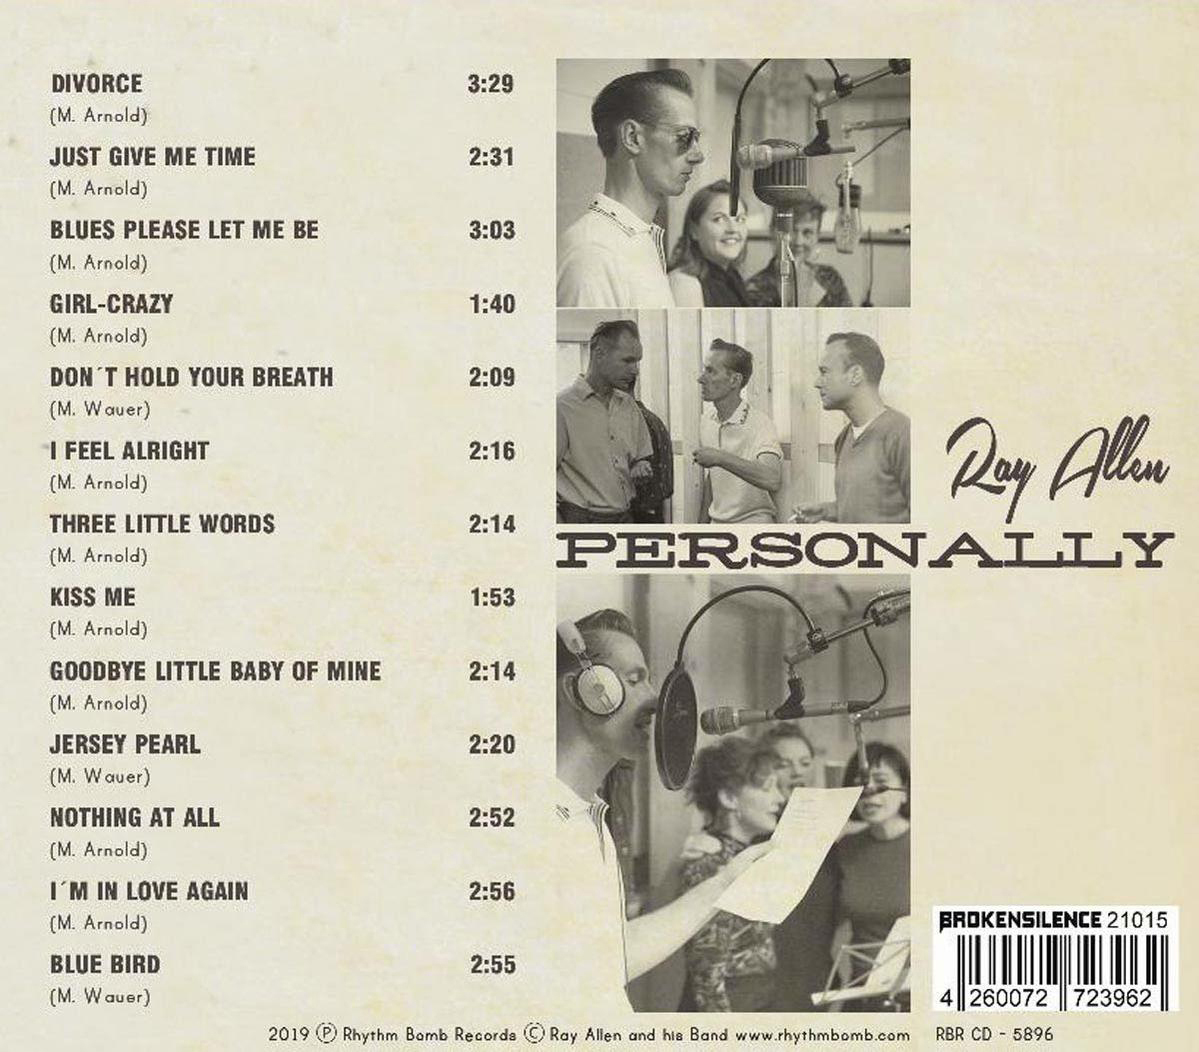 Ray Allen Personally - (CD) 